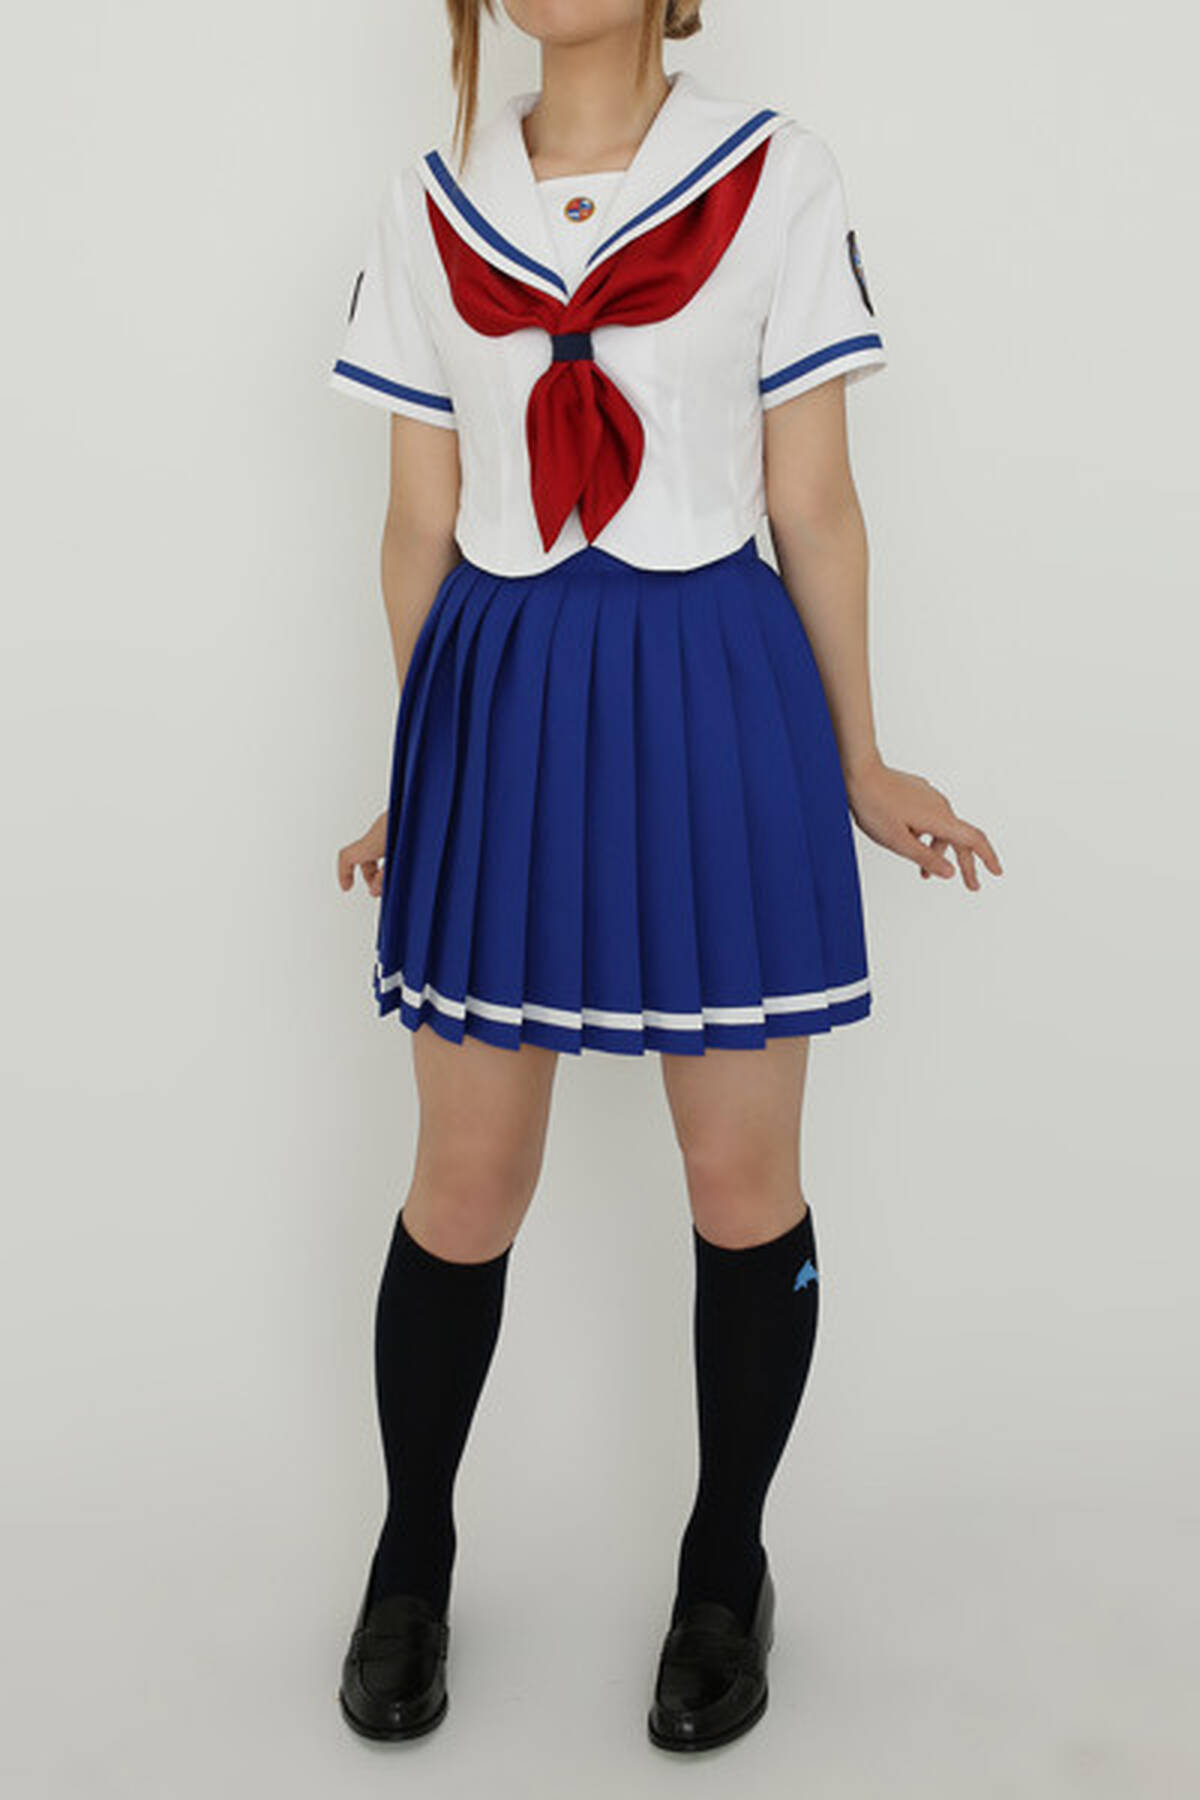 Tvアニメ ハイスクール フリート 横須賀女子海洋学校制服がコスパから 8月中旬発売予定 アキバ総研